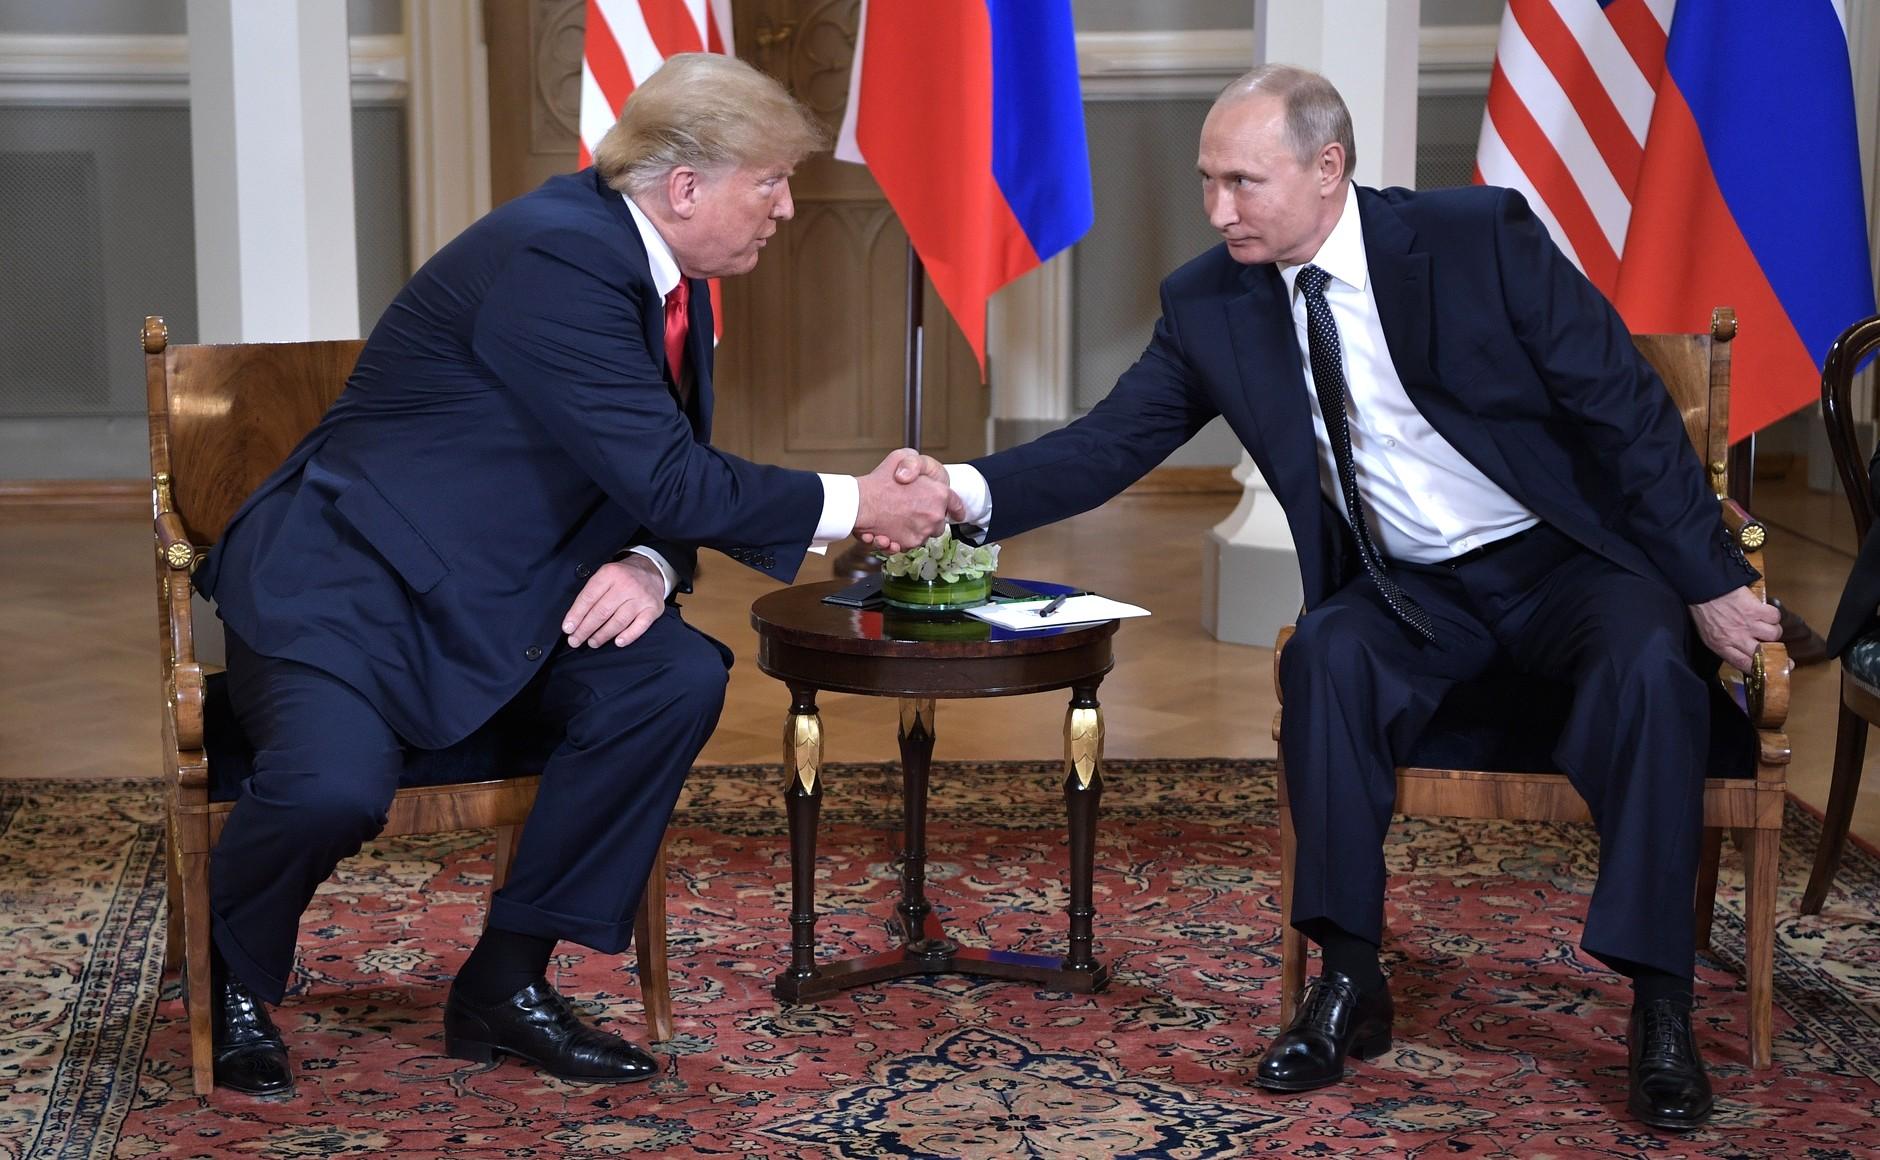 No cedí nada a Putin, asegura Trump